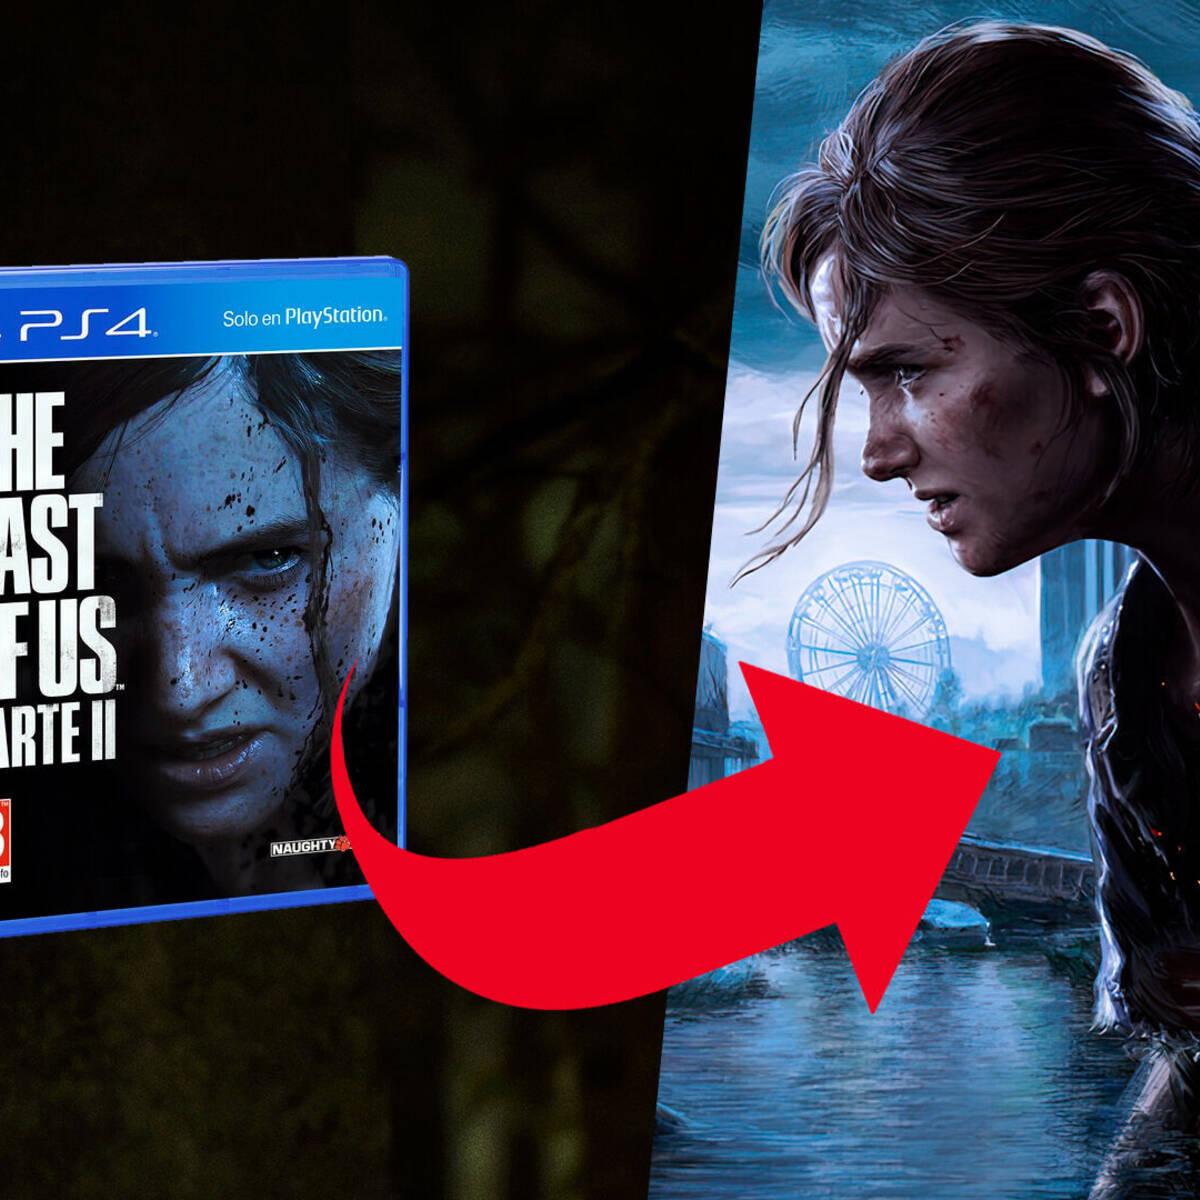 The Last of Us Part II Remaster: versão de PS5 é adicionada ao